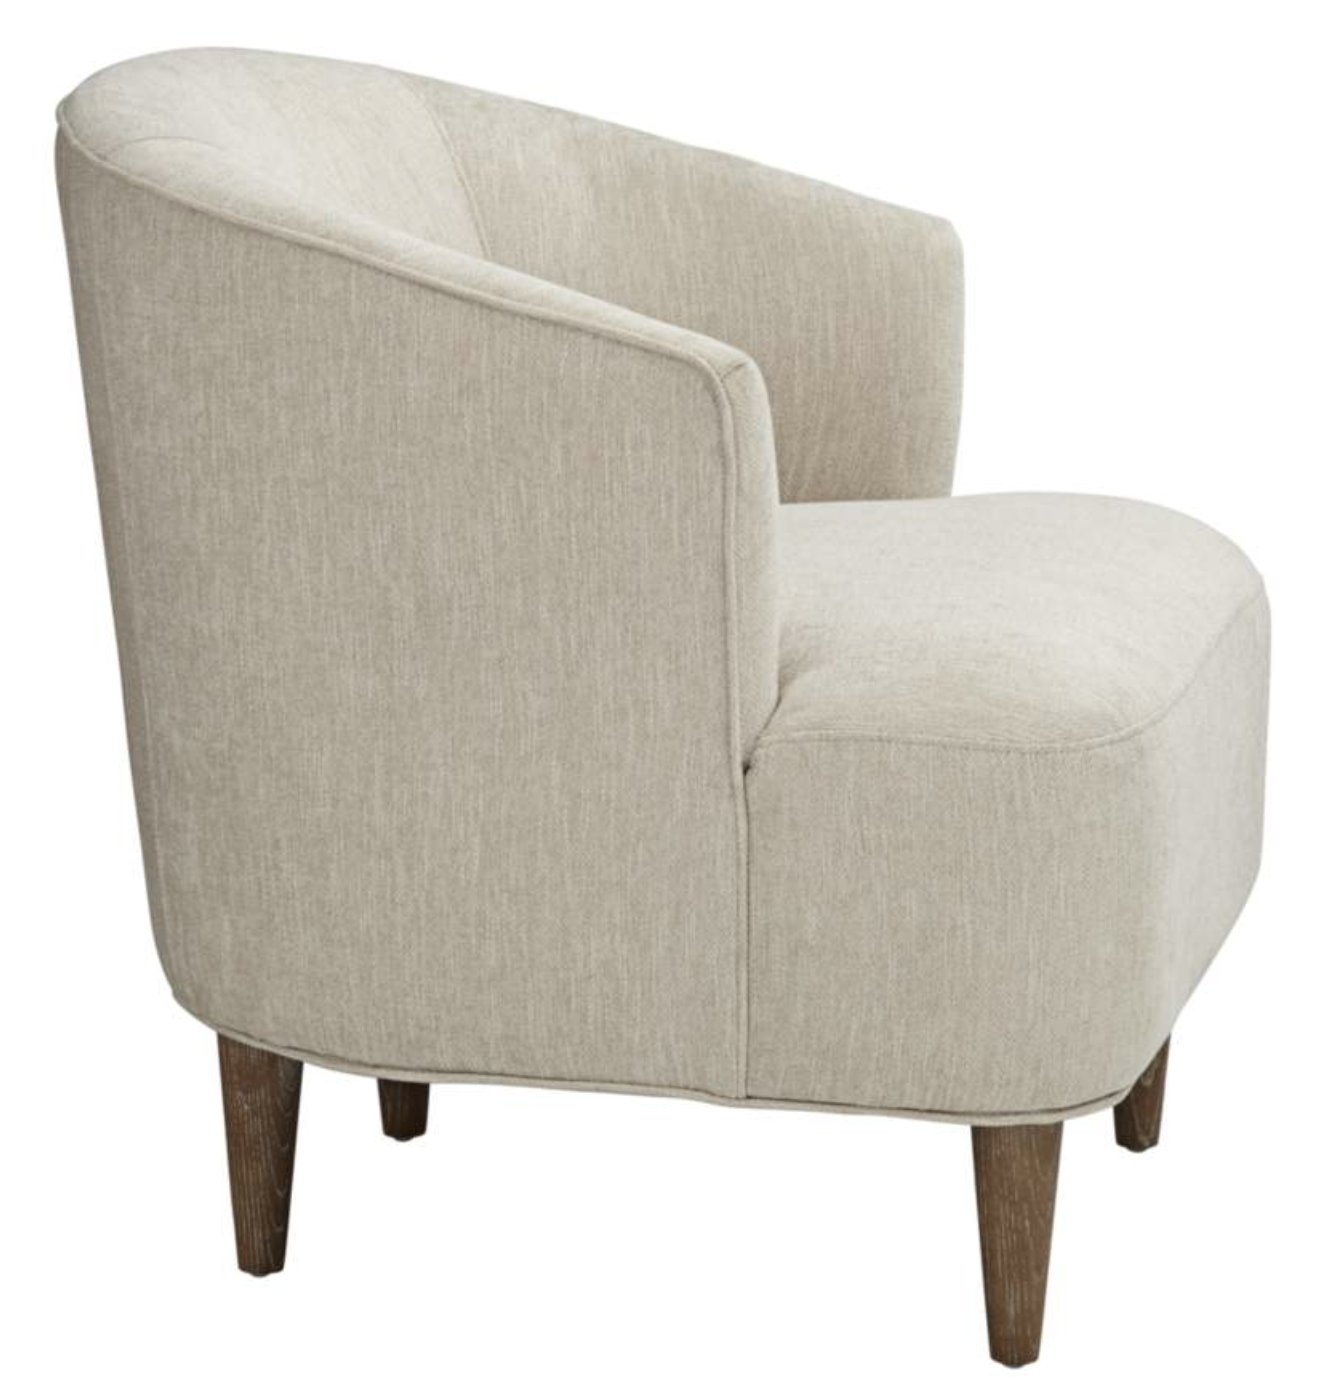 Herringbone Beige Fabric Accent Chair - Style # 79D20 - Image 1